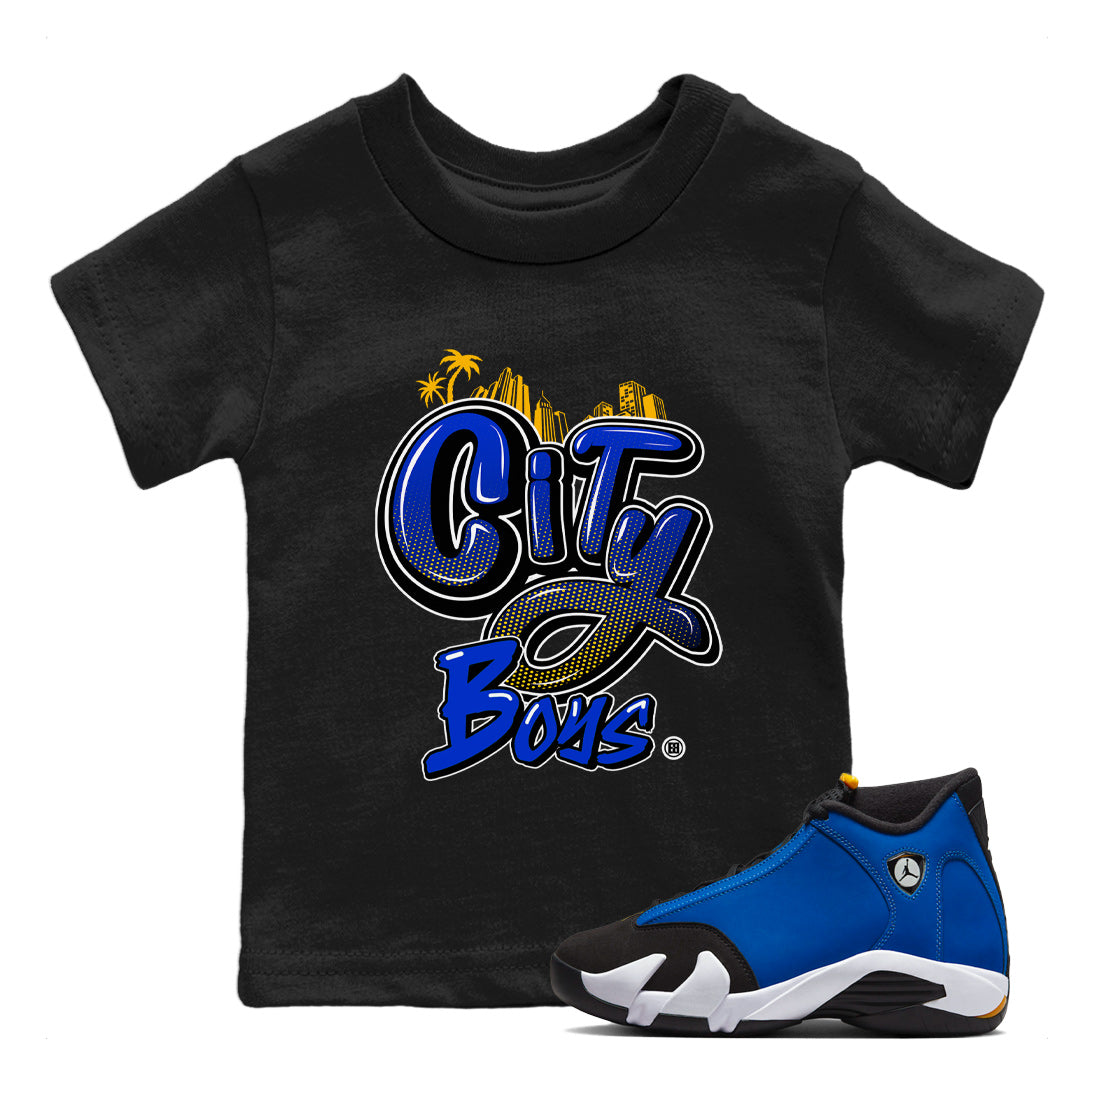 Air Jordan 14 Laney Sneaker Match Tees City Boys Sneaker Tees 14s Laney Sneaker Release Tees Kids Shirts Black 1